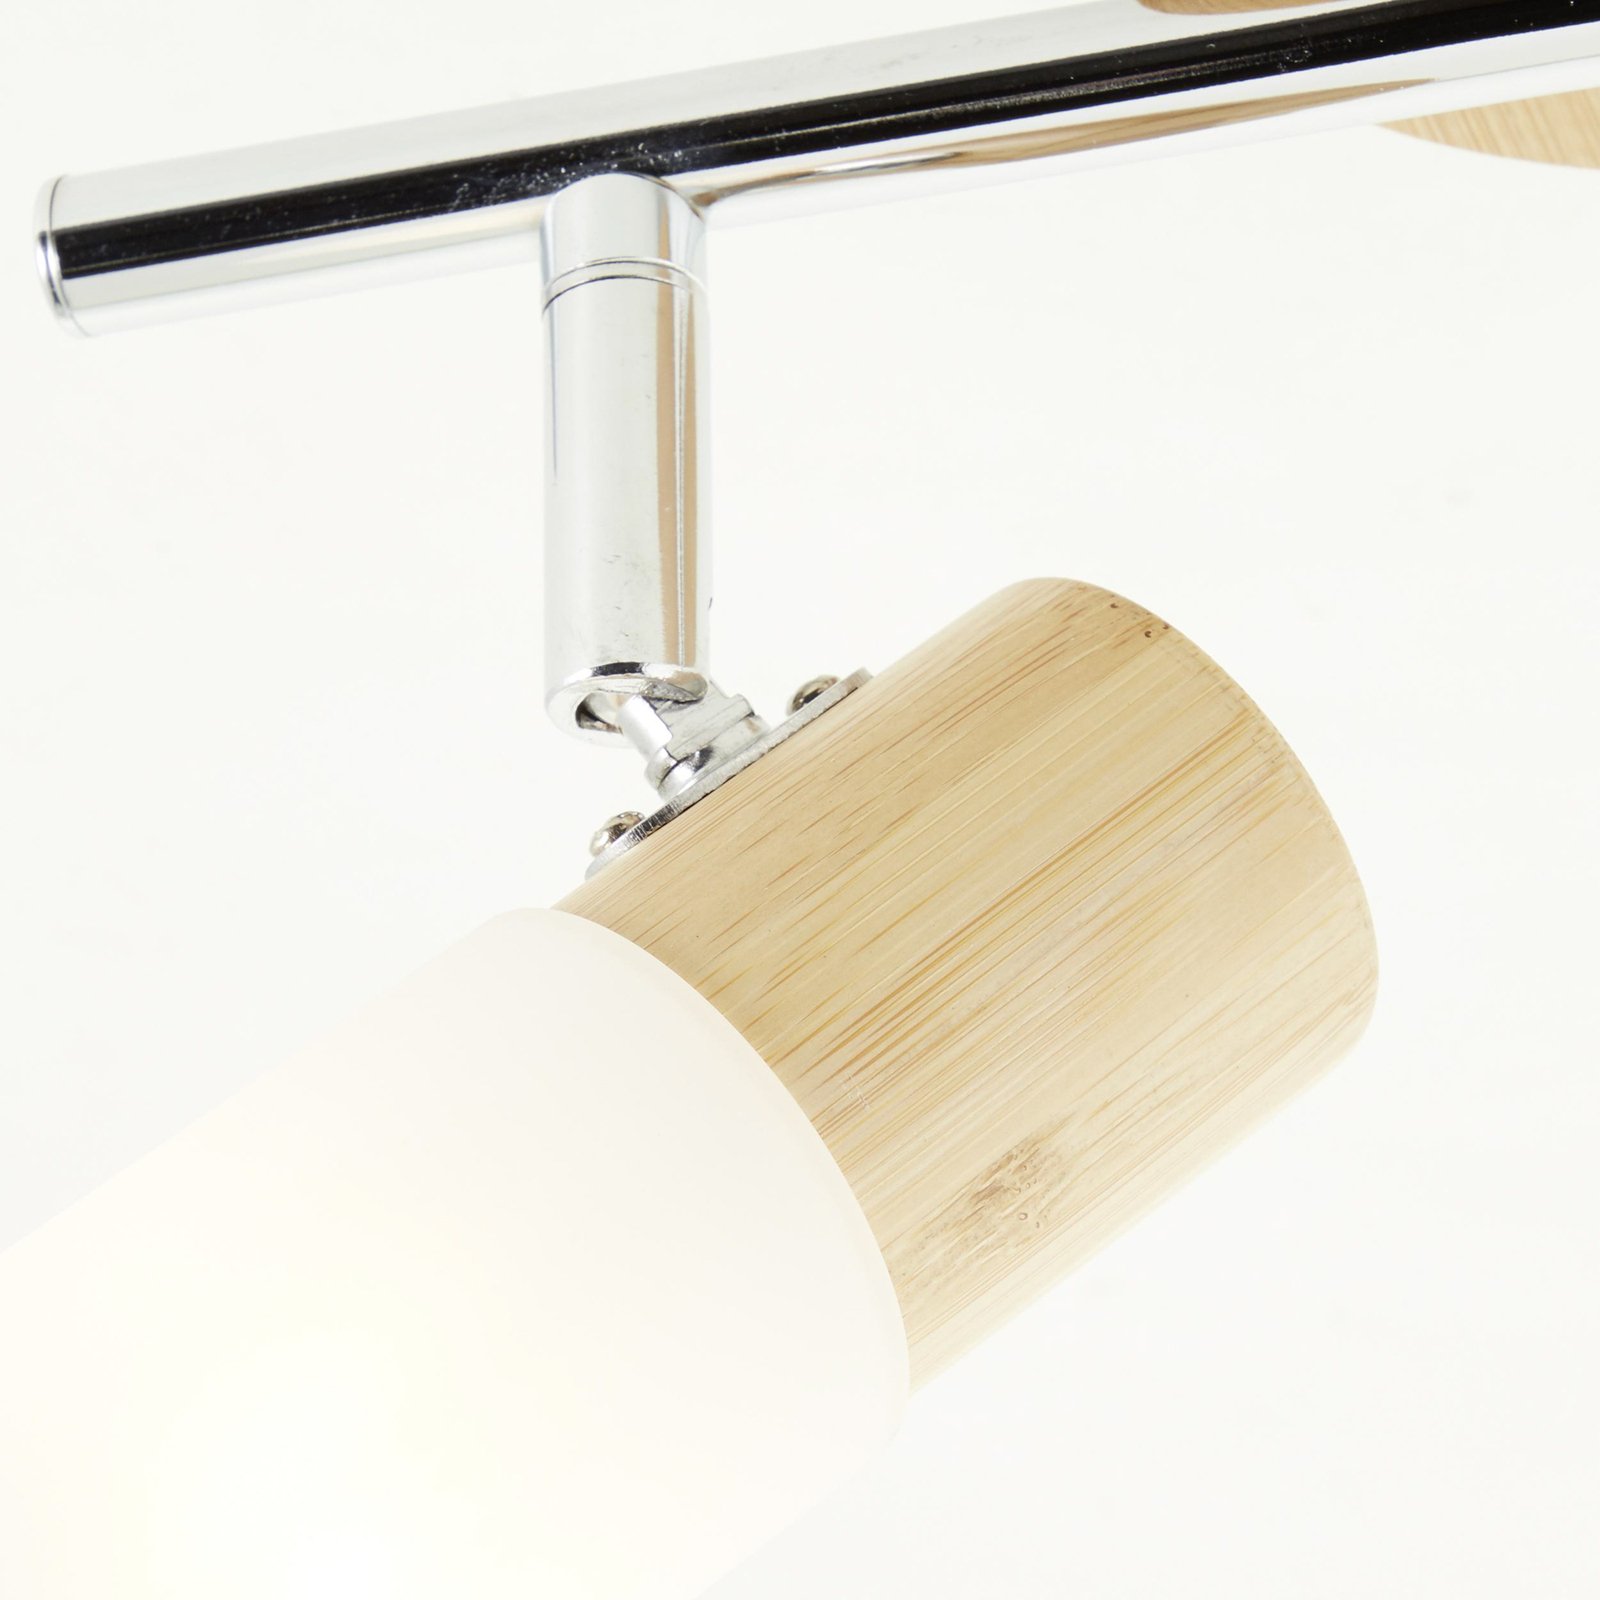 Babsan downlight, length 27.5 cm, light wood, 2-bulb.